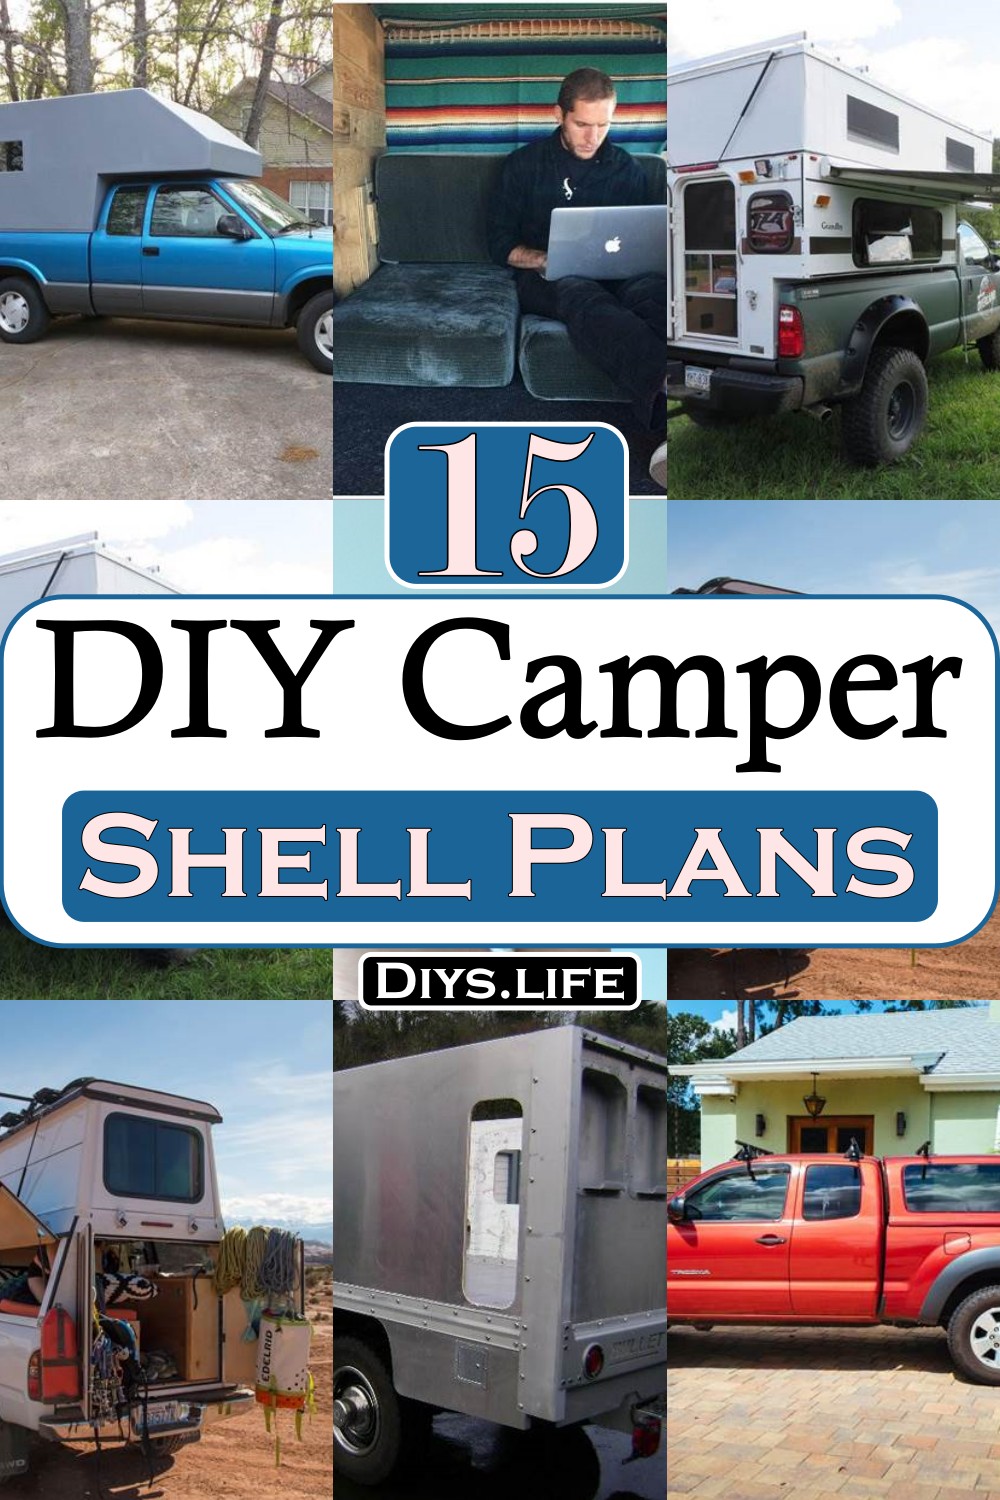 DIY Camper Shell Plans